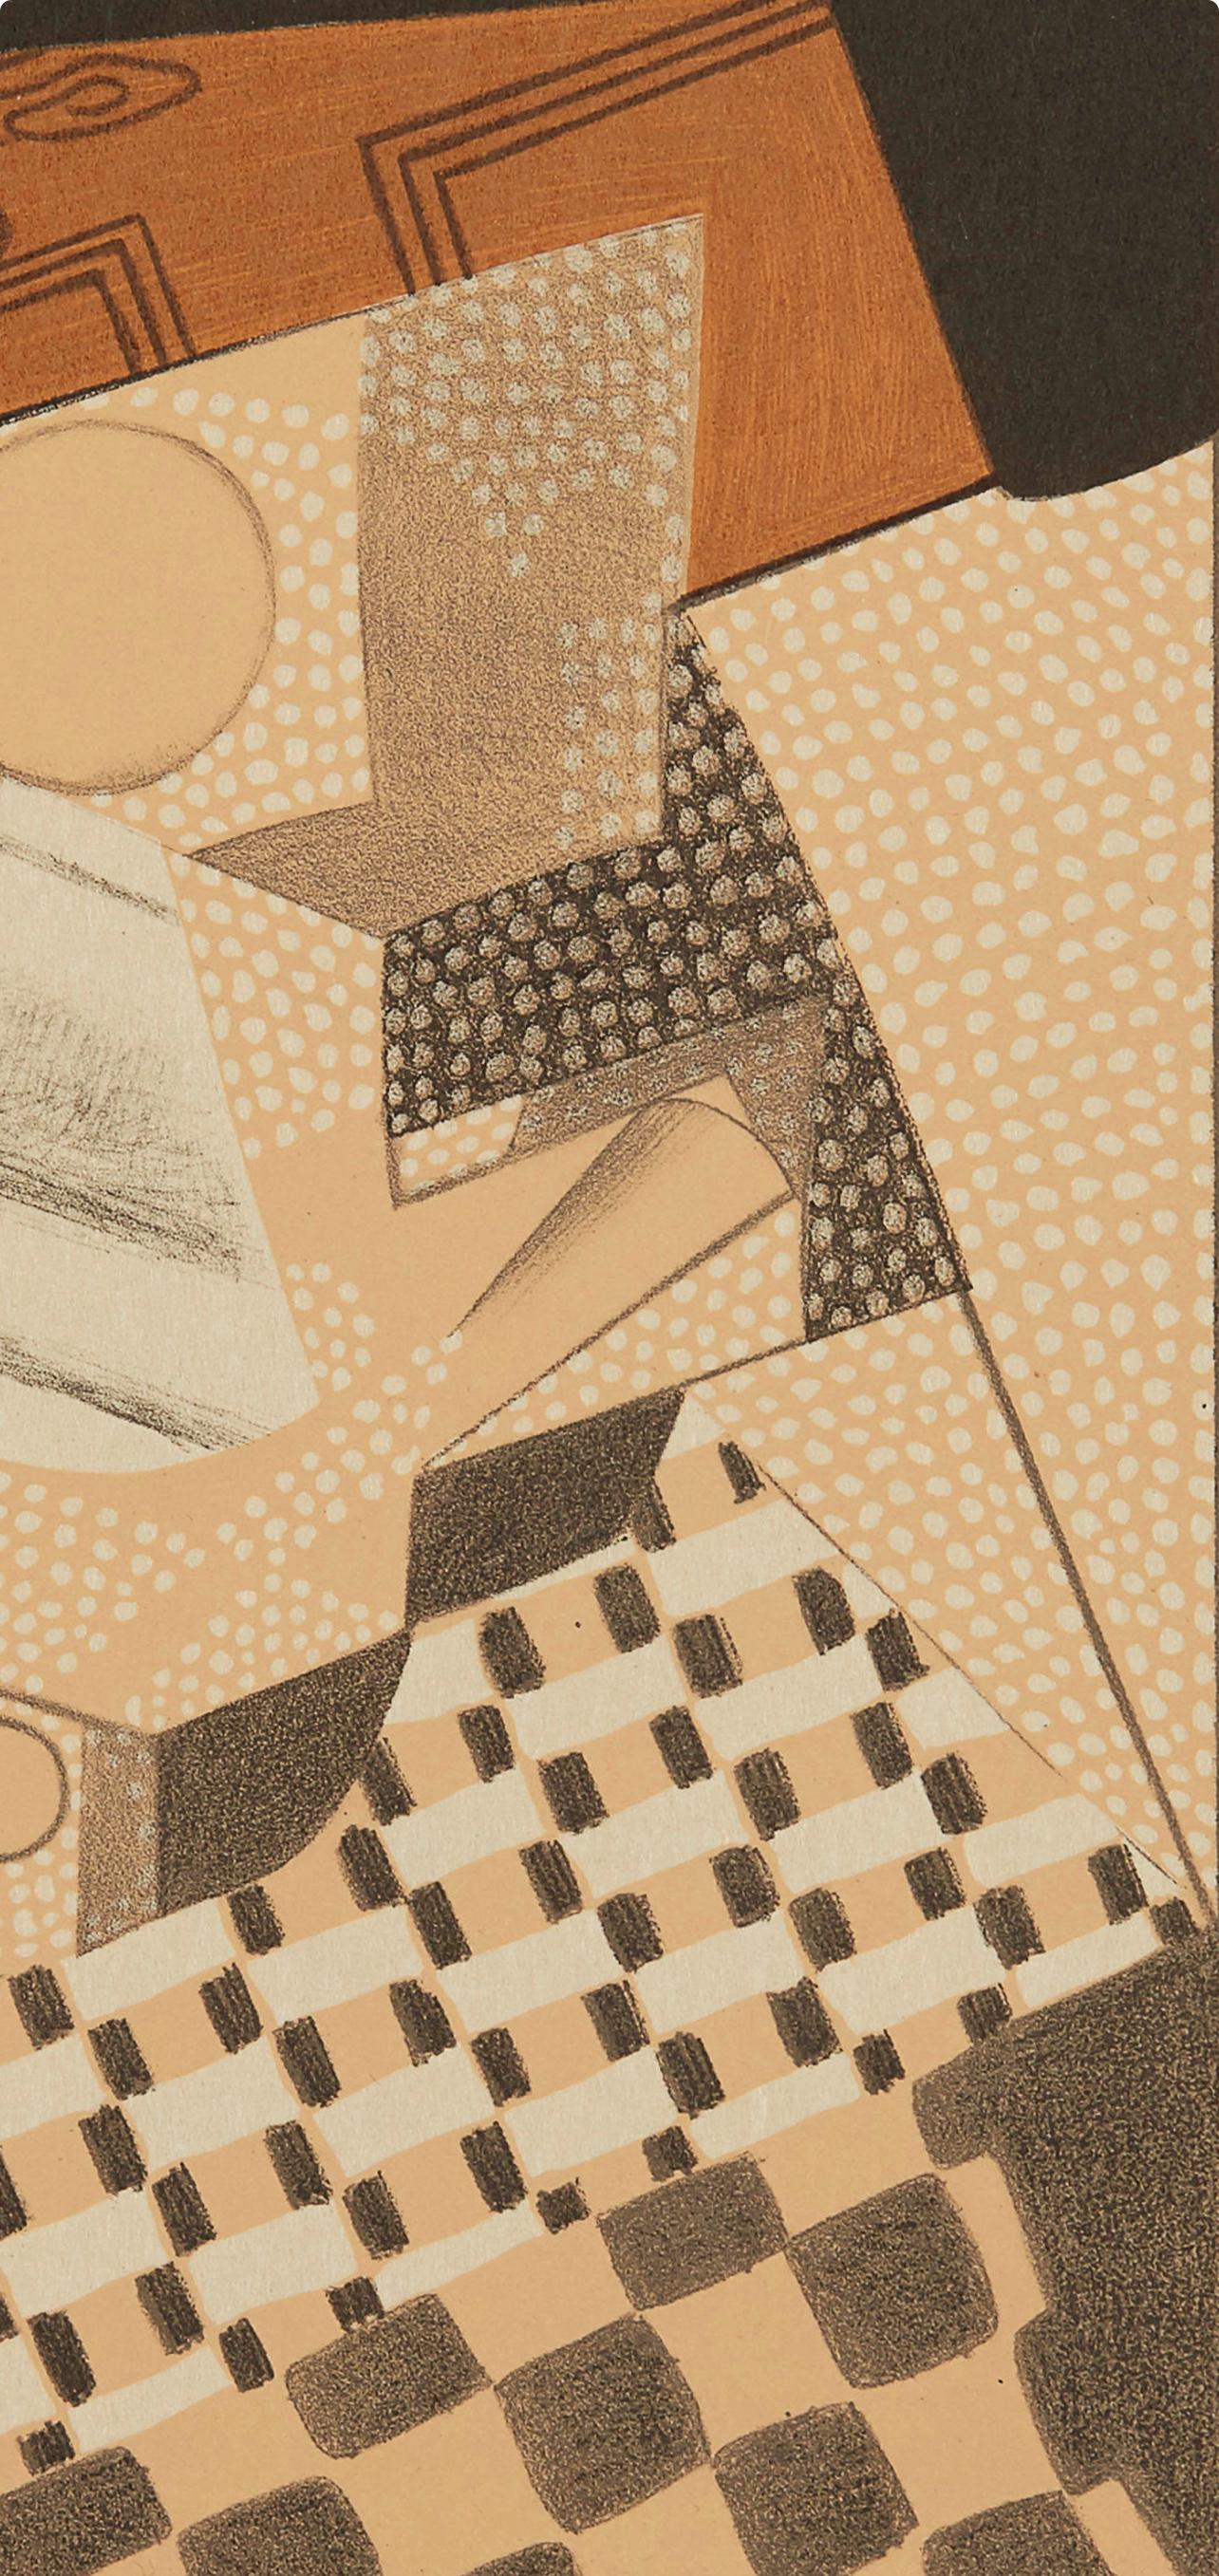 Gris, Loupière (Kahnweiler 1969), Au Soleil du Plafond (after) - Modern Print by Juan Gris